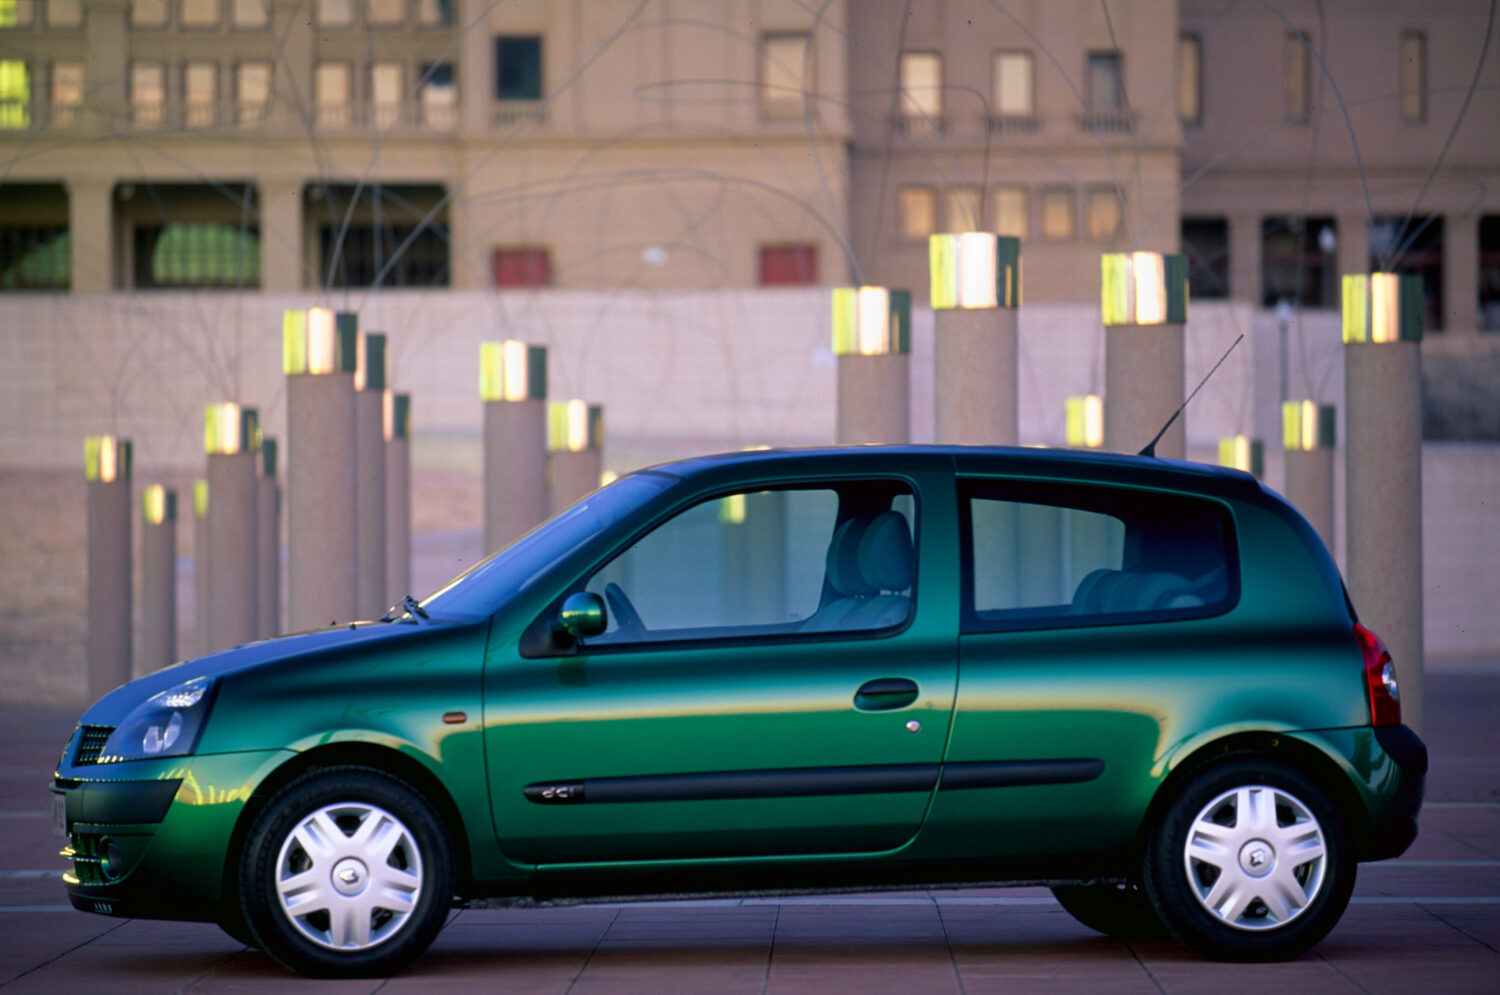 2020 - 30 ans de Renault CLIO - Renault CLIO 2 (1998-2005)